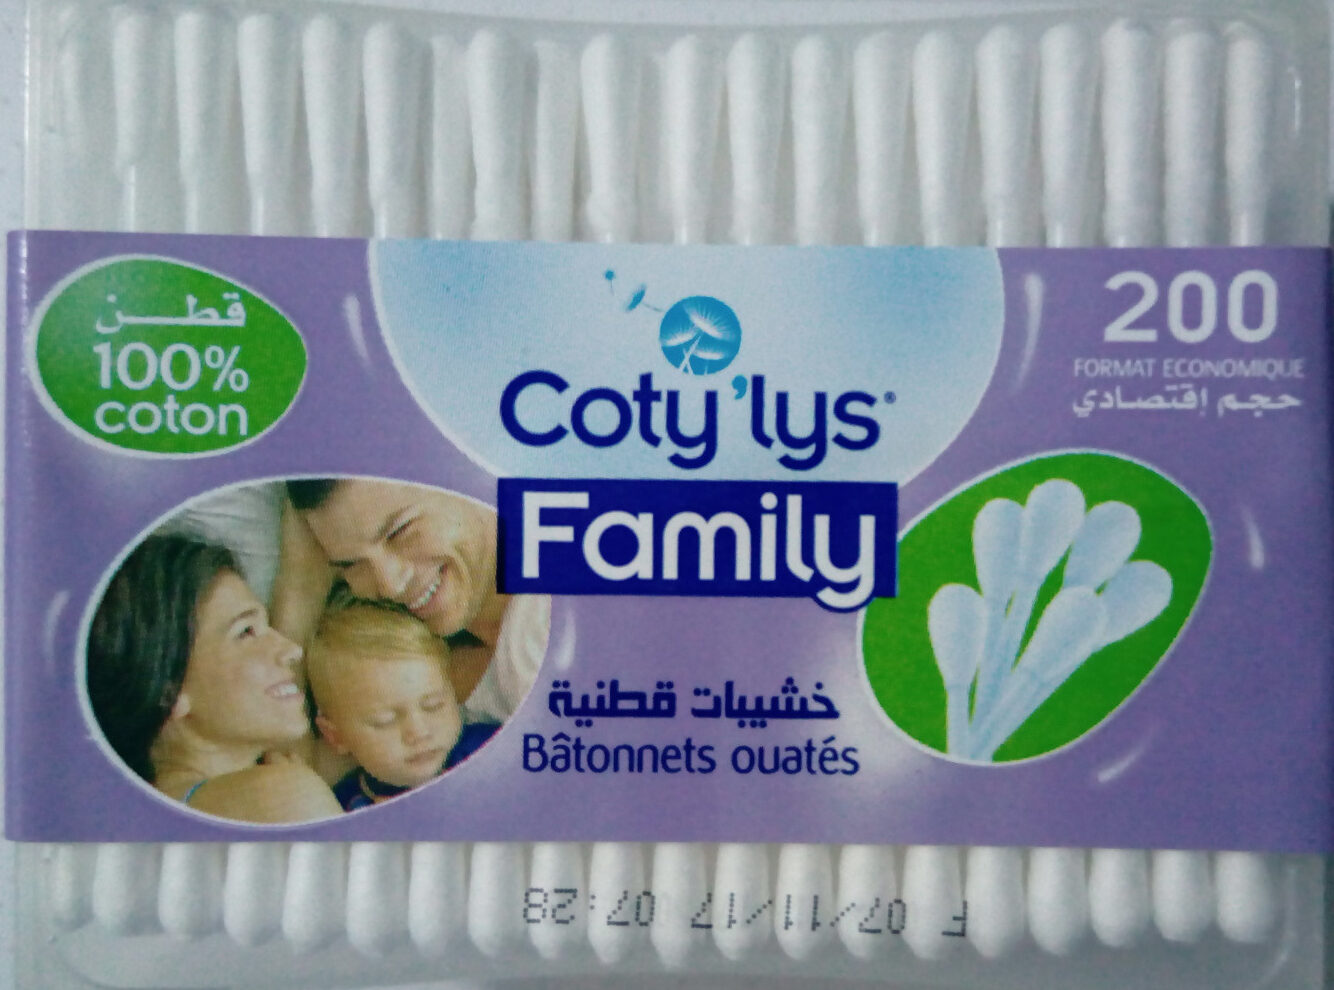 Coty'lys Family batonnets ouatés - Produto - fr